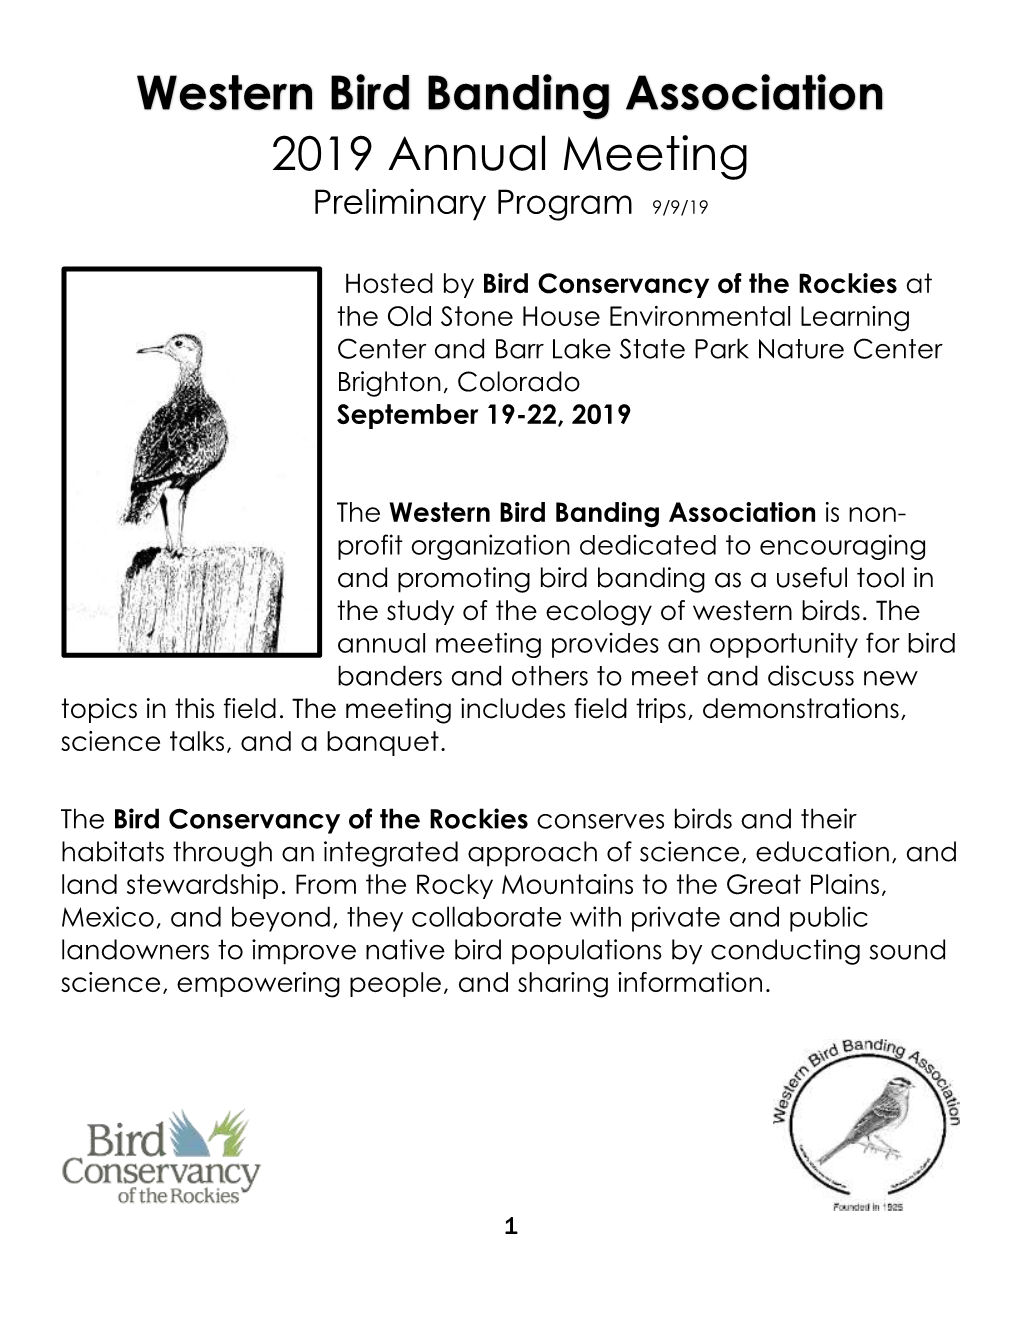 Western Bird Banding Association 2019 Annual Meeting Preliminary Program 9/9/19